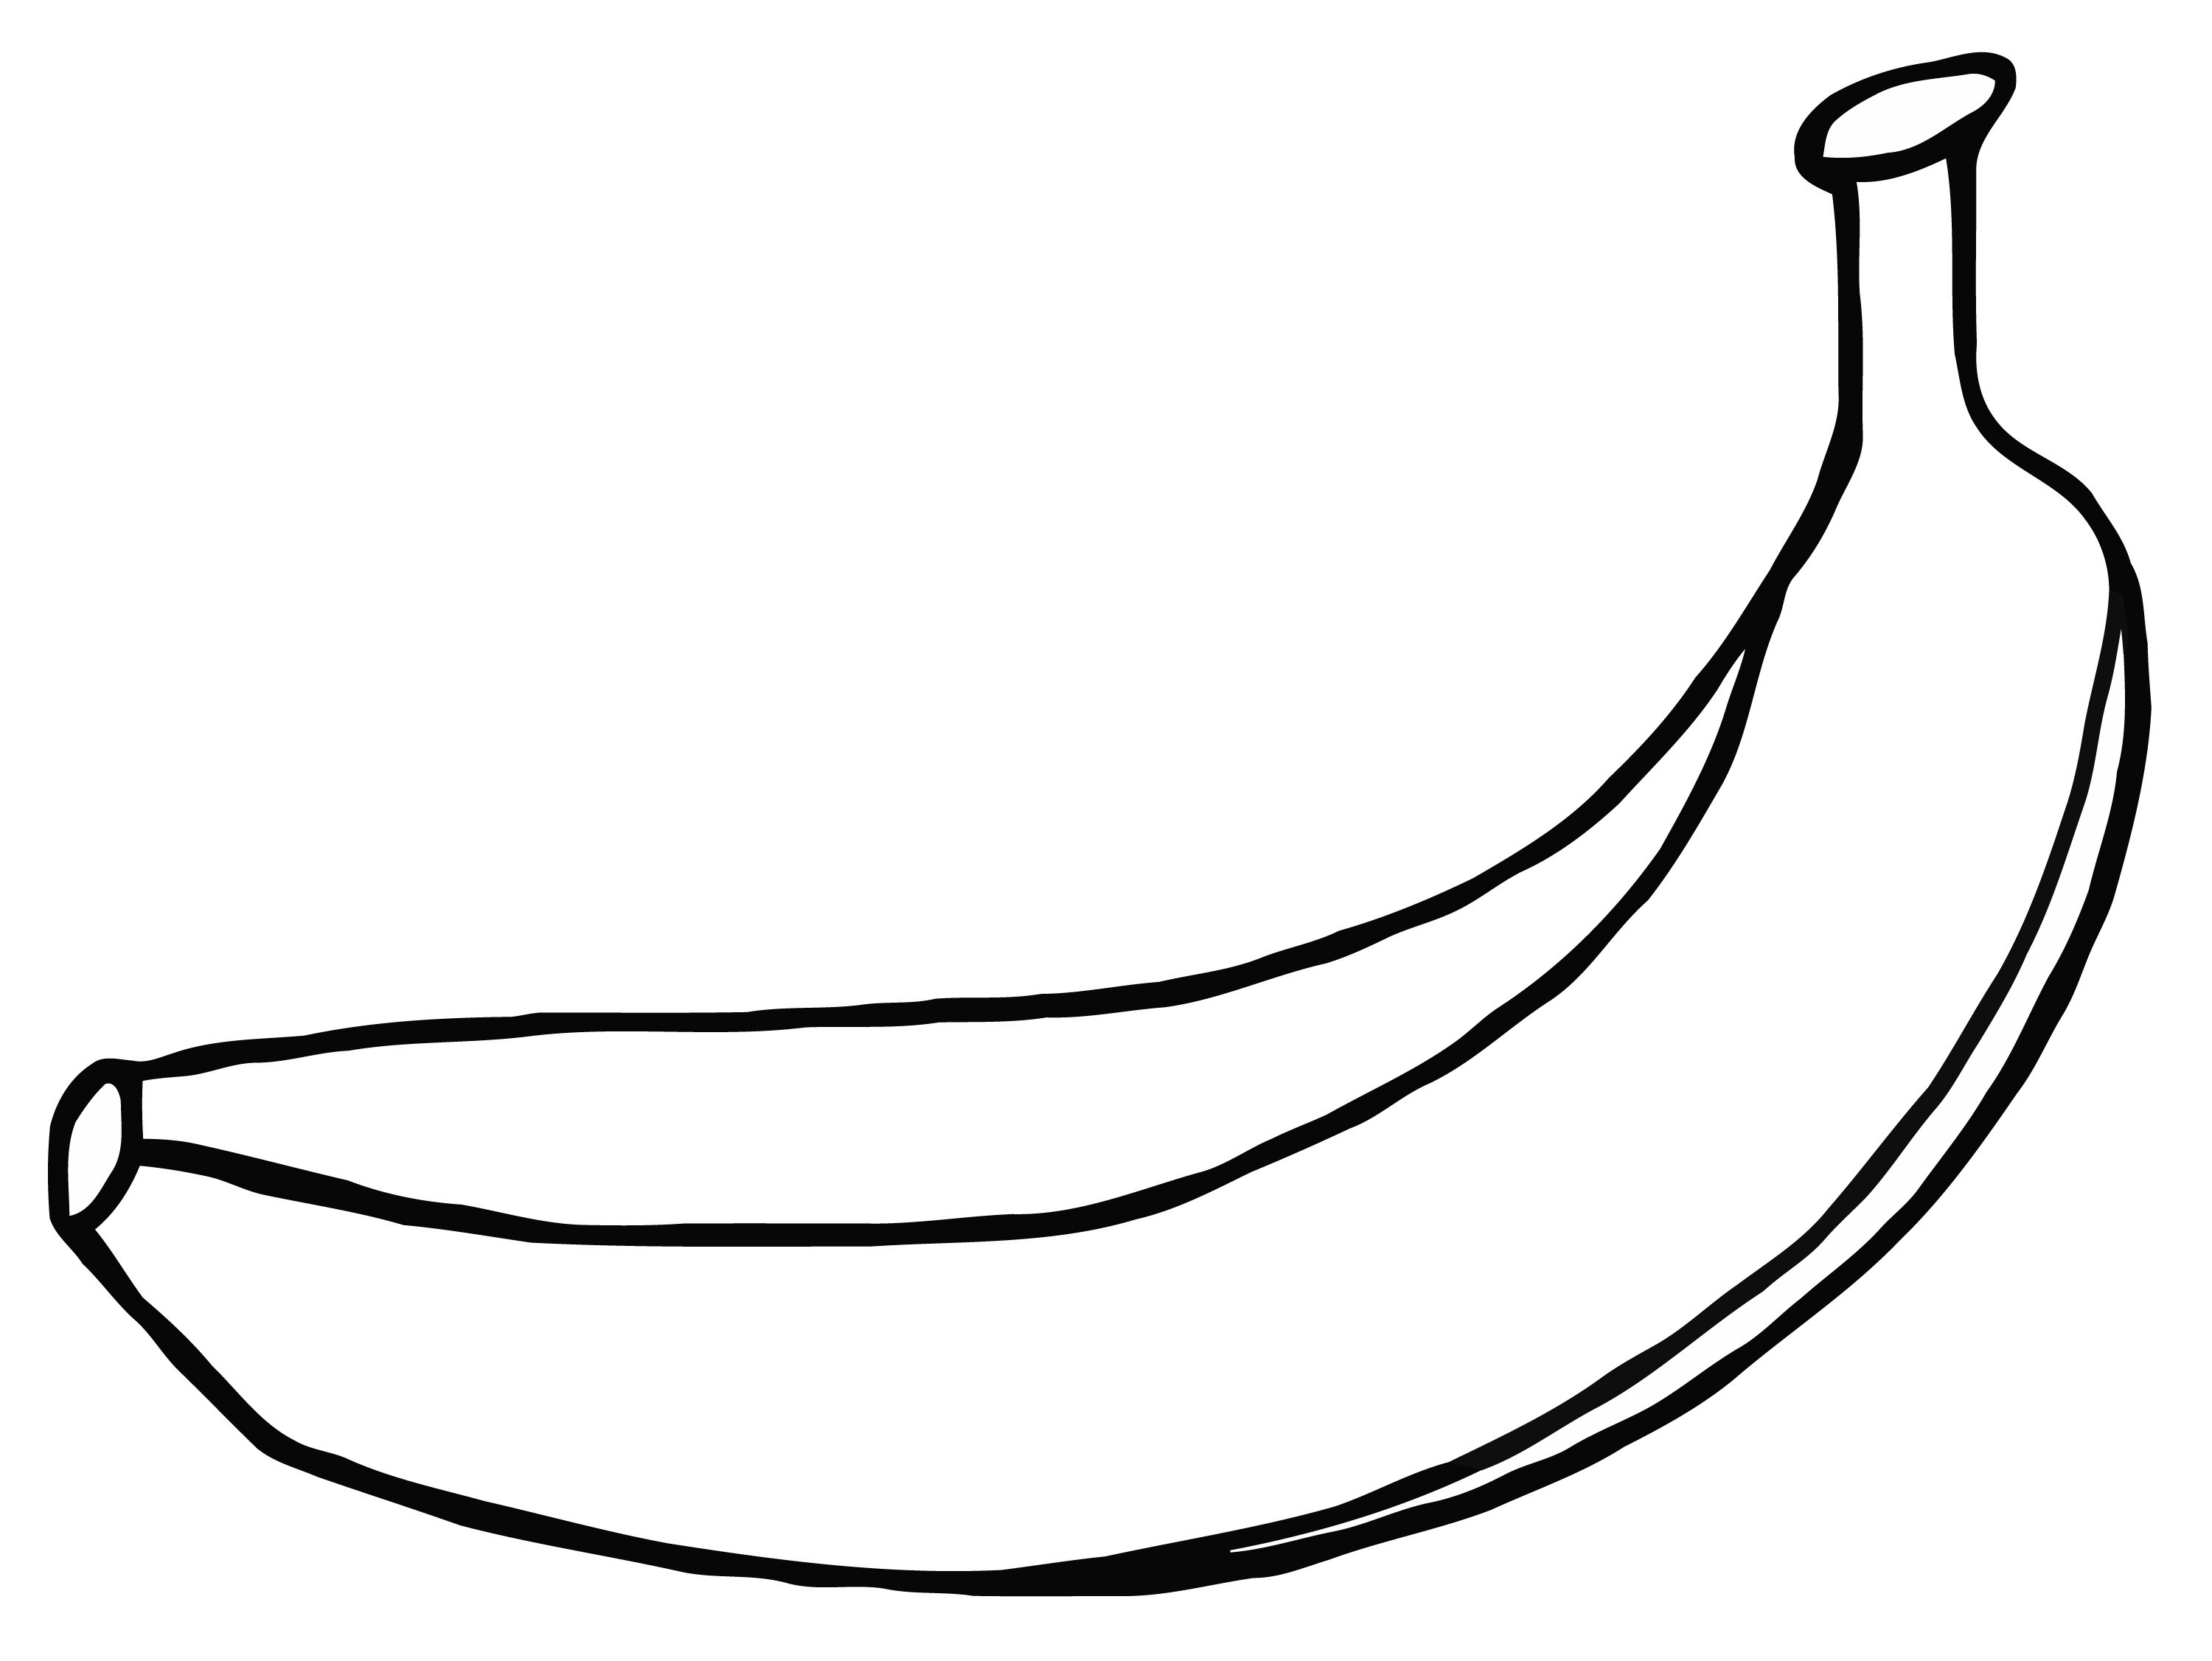 Banana template